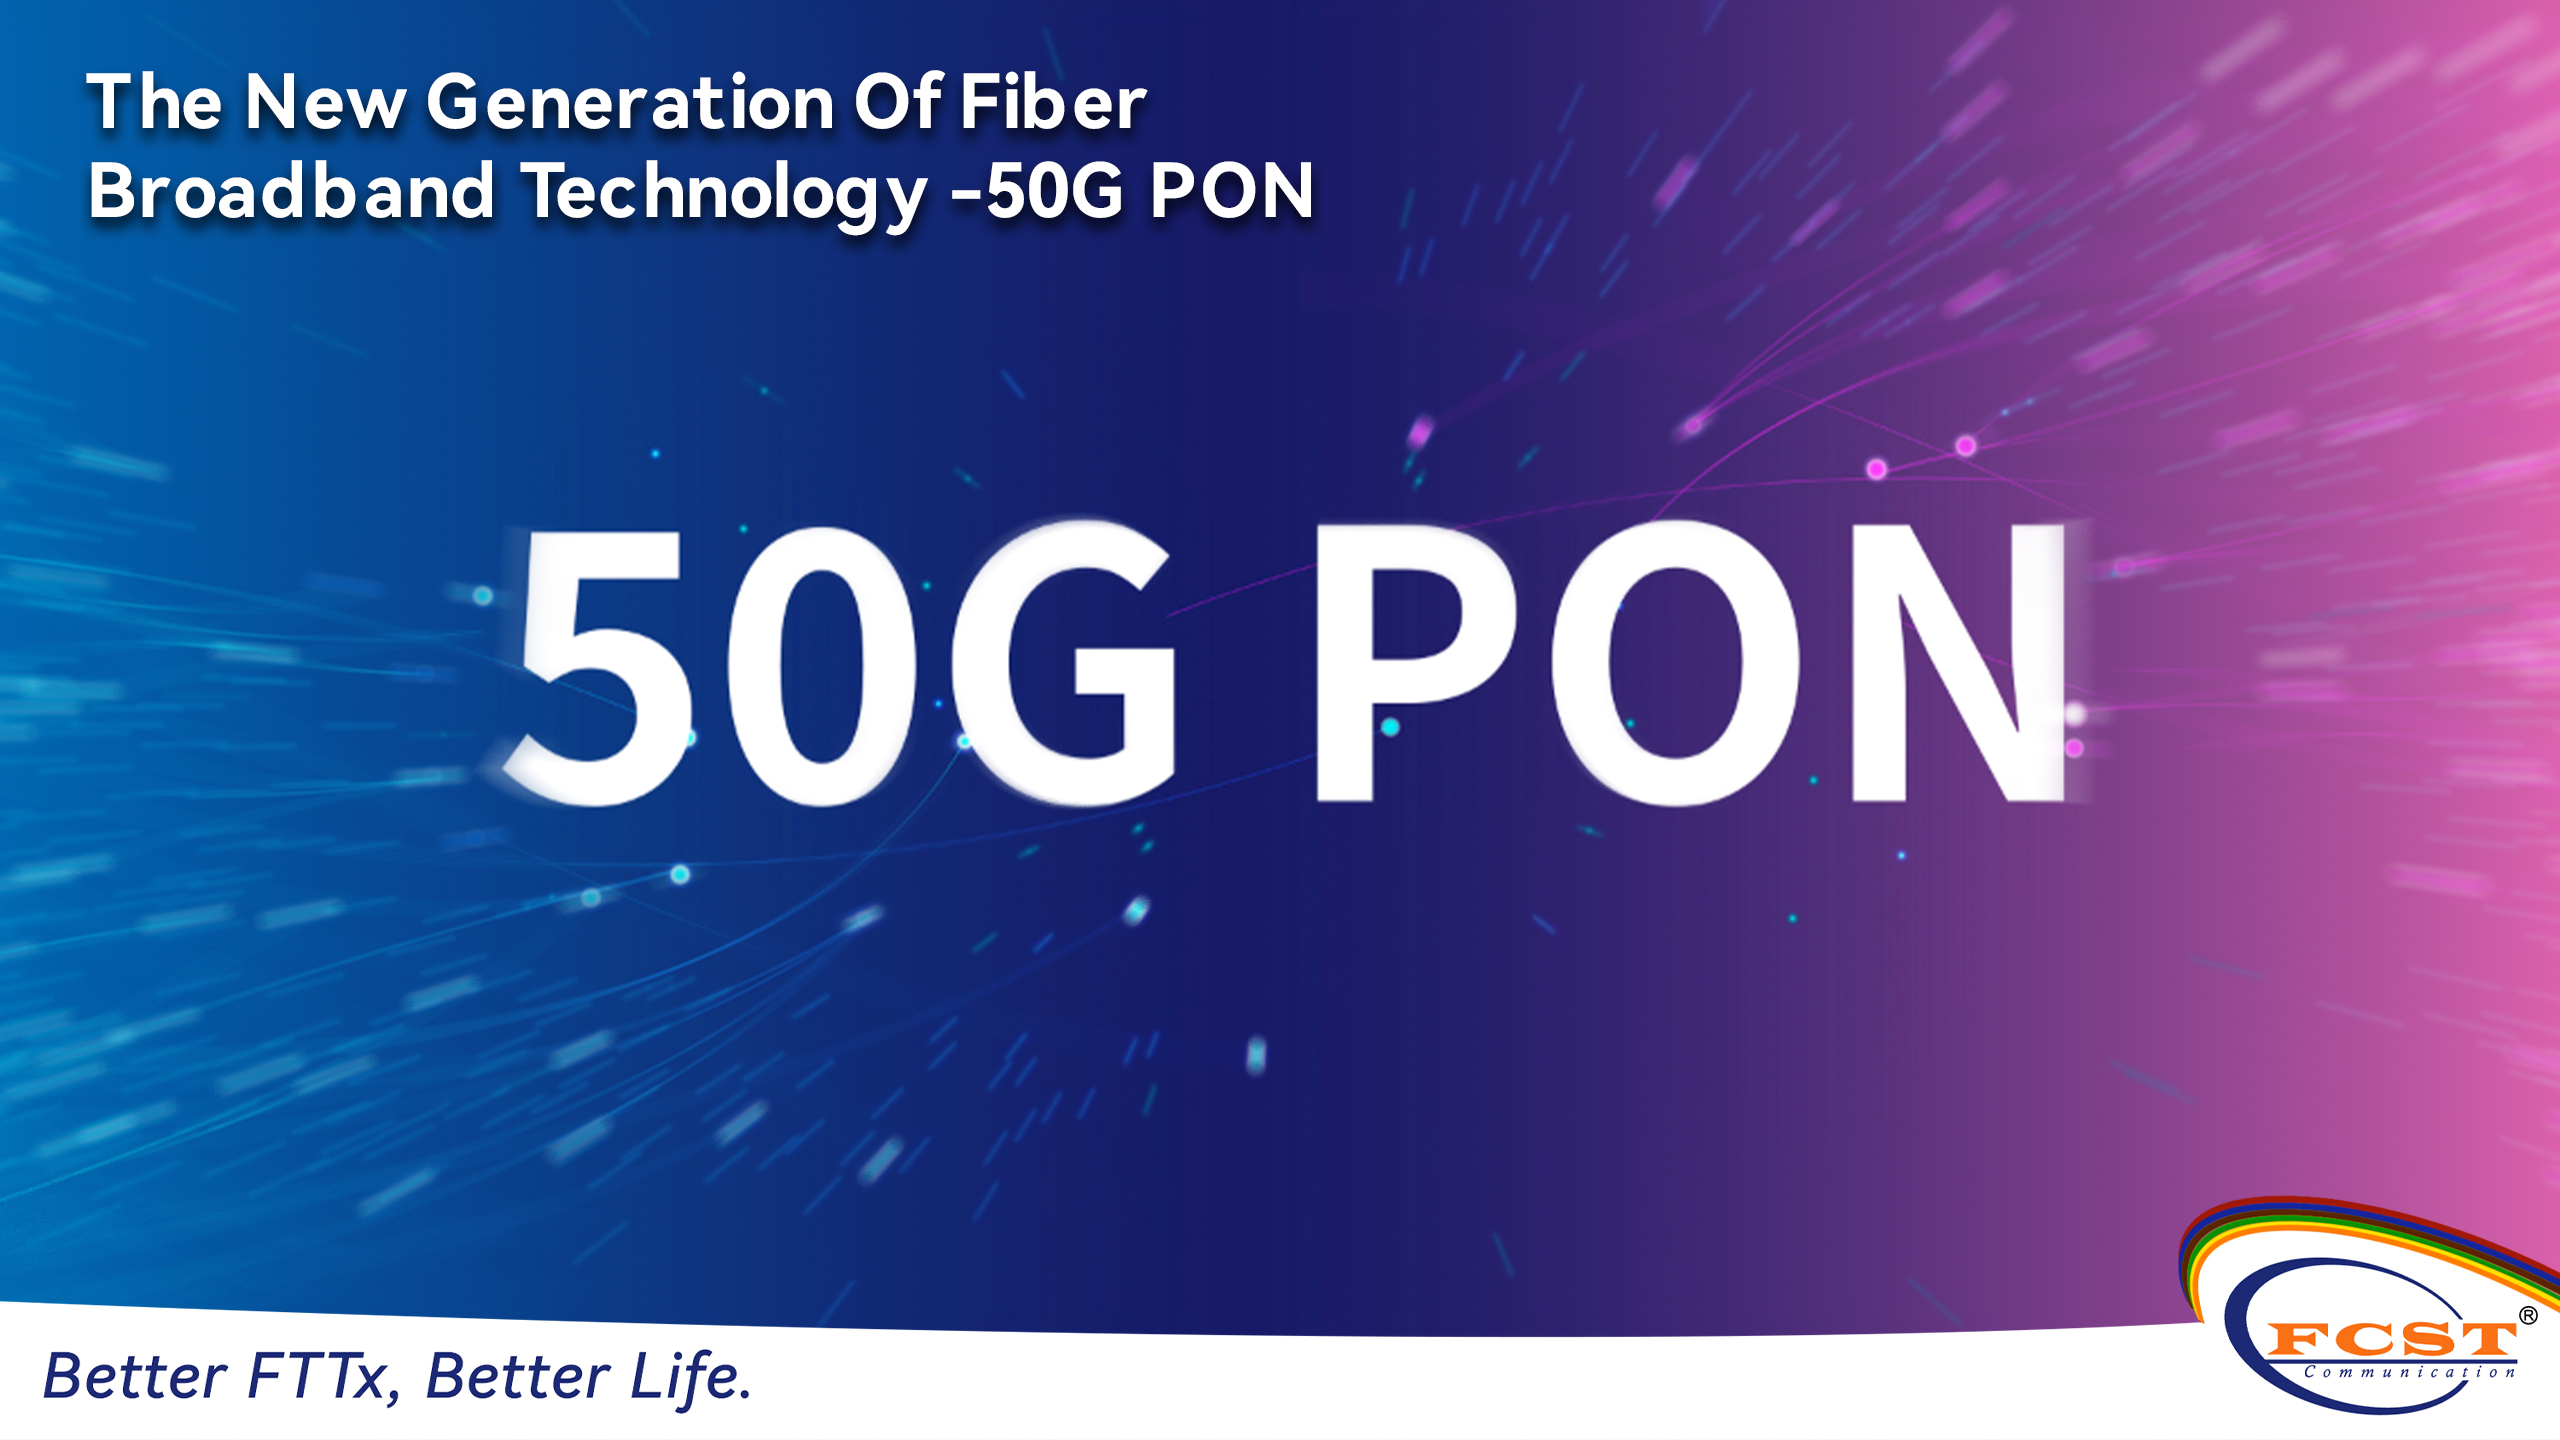 The New Generation Of Fiber Broadband Technology -50G PON (12).jpg